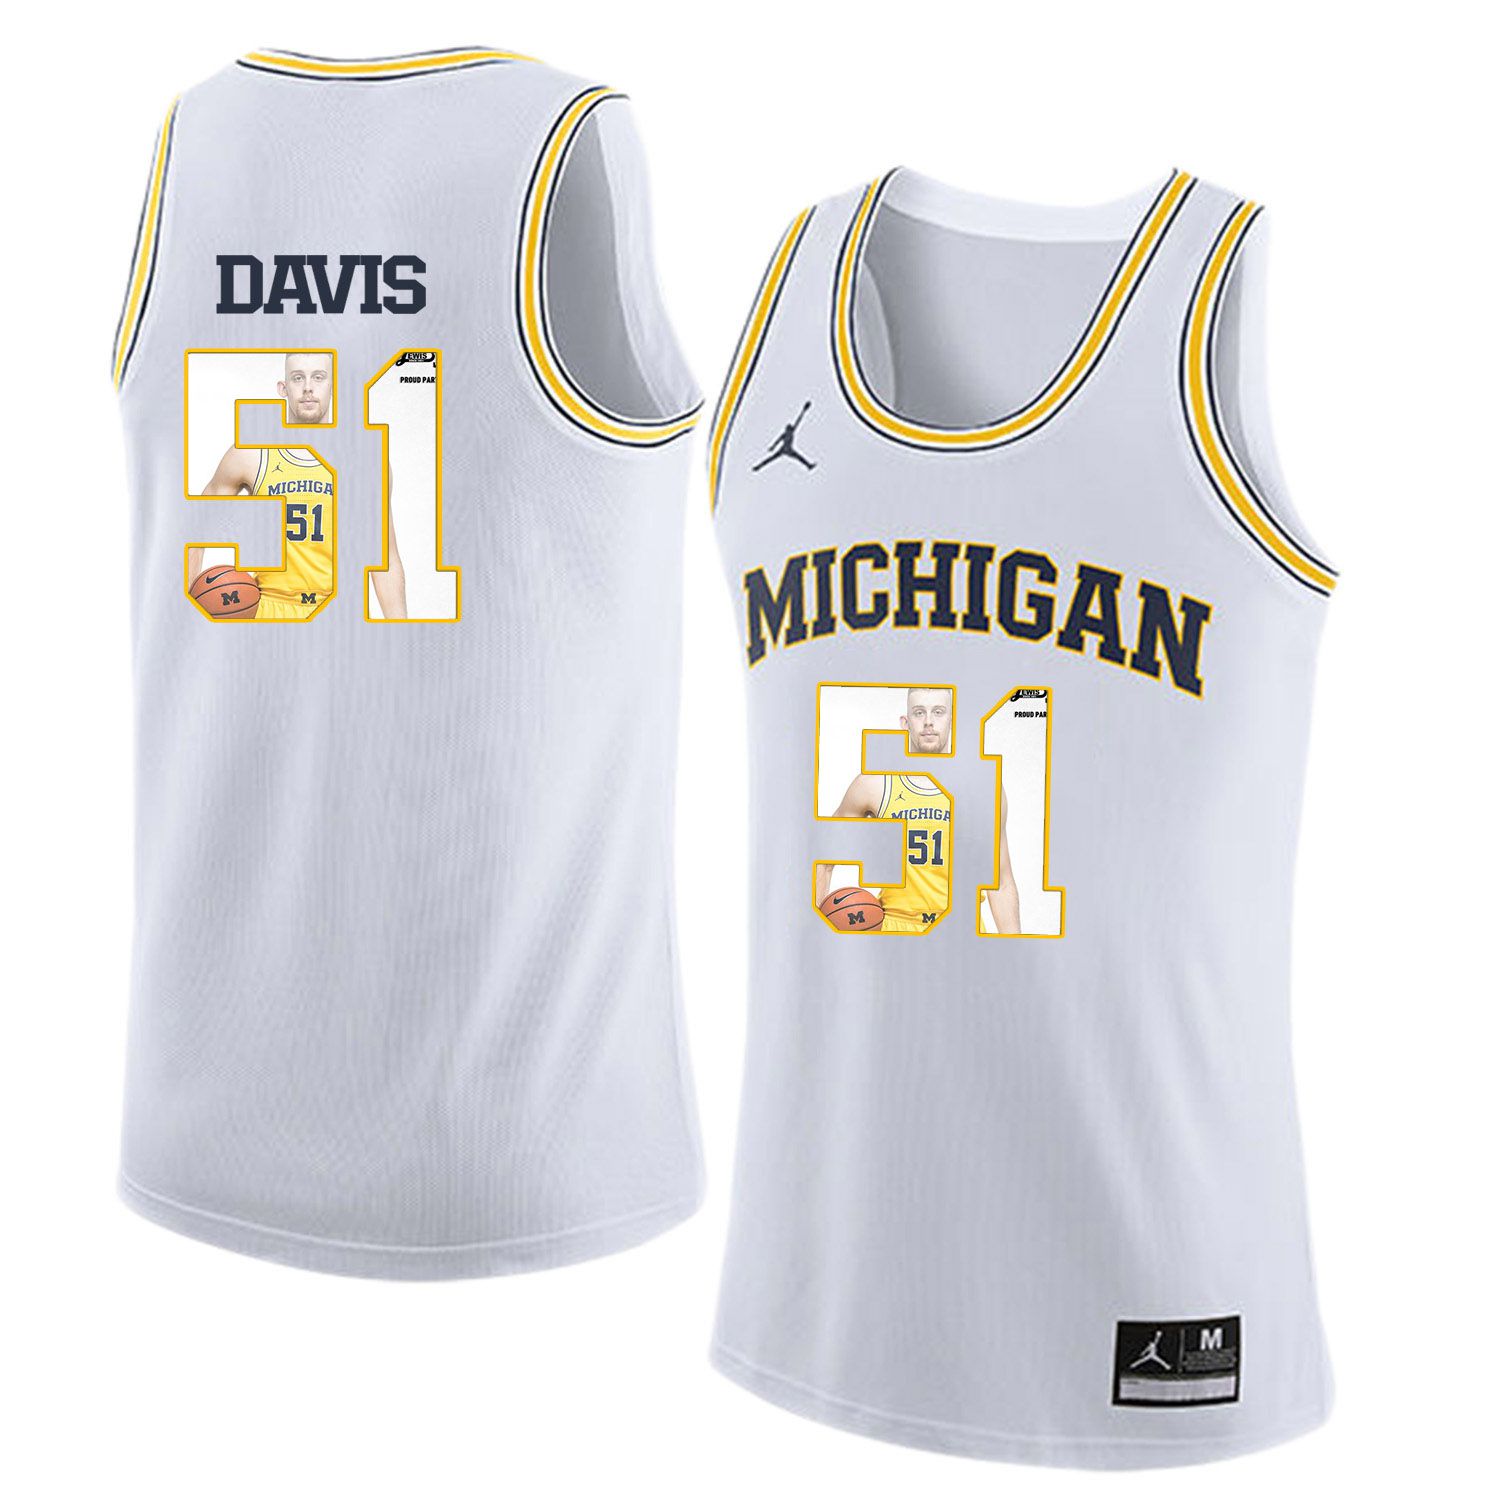 Men Jordan University of Michigan Basketball White 51 Davis Fashion Edition Customized NCAA Jerseys